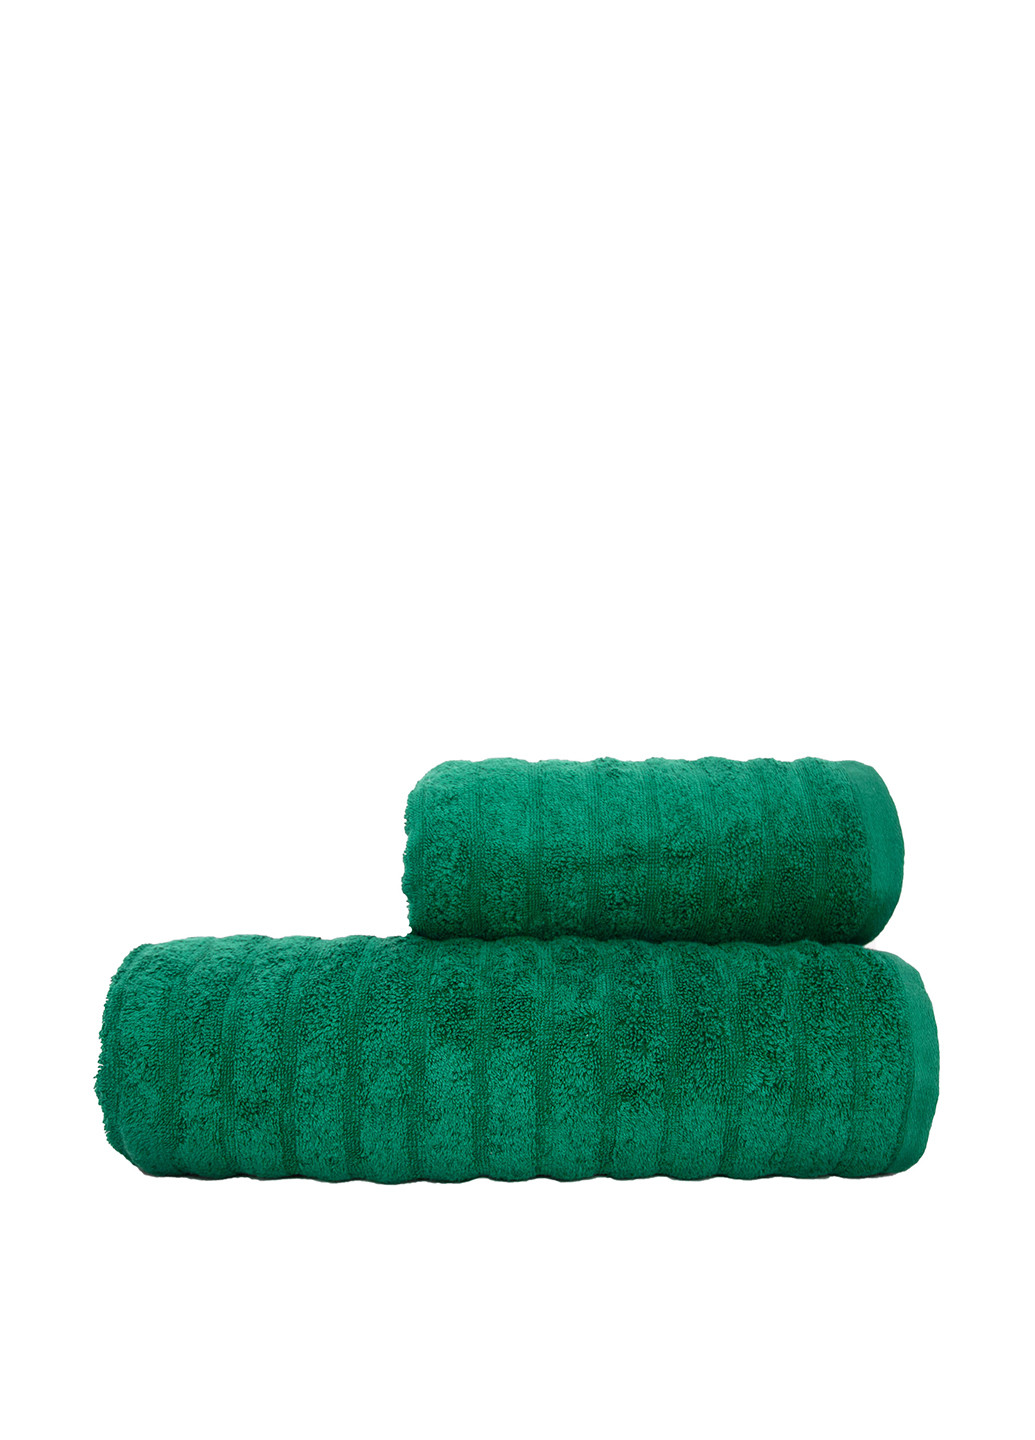 Romeo Soft полотенце, 50х90 см однотонный зеленый производство - Турция